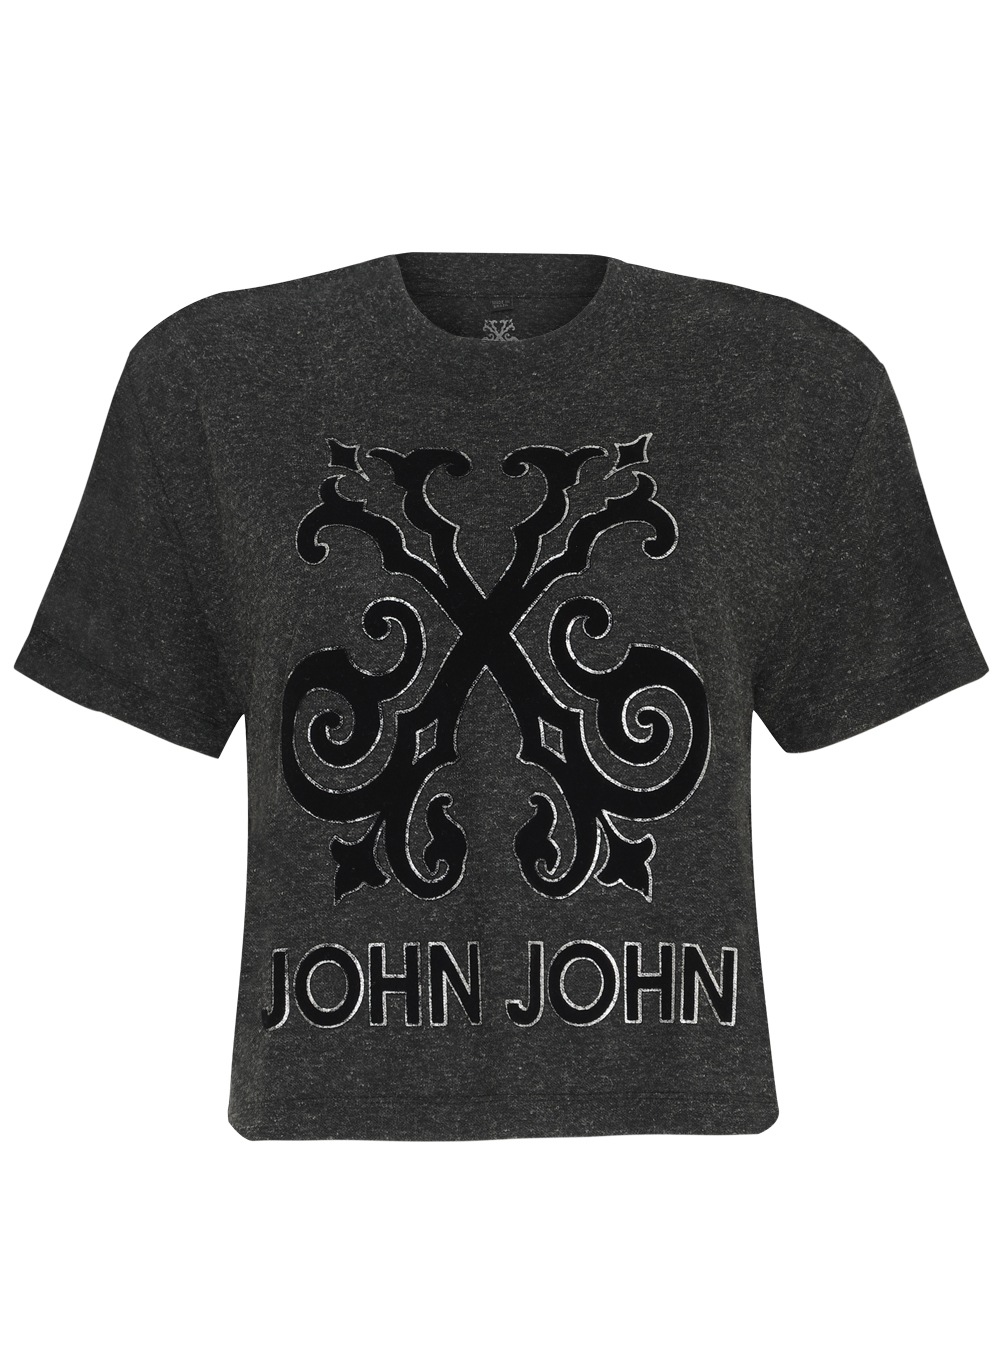 Camiseta feminina john john, pontofrio